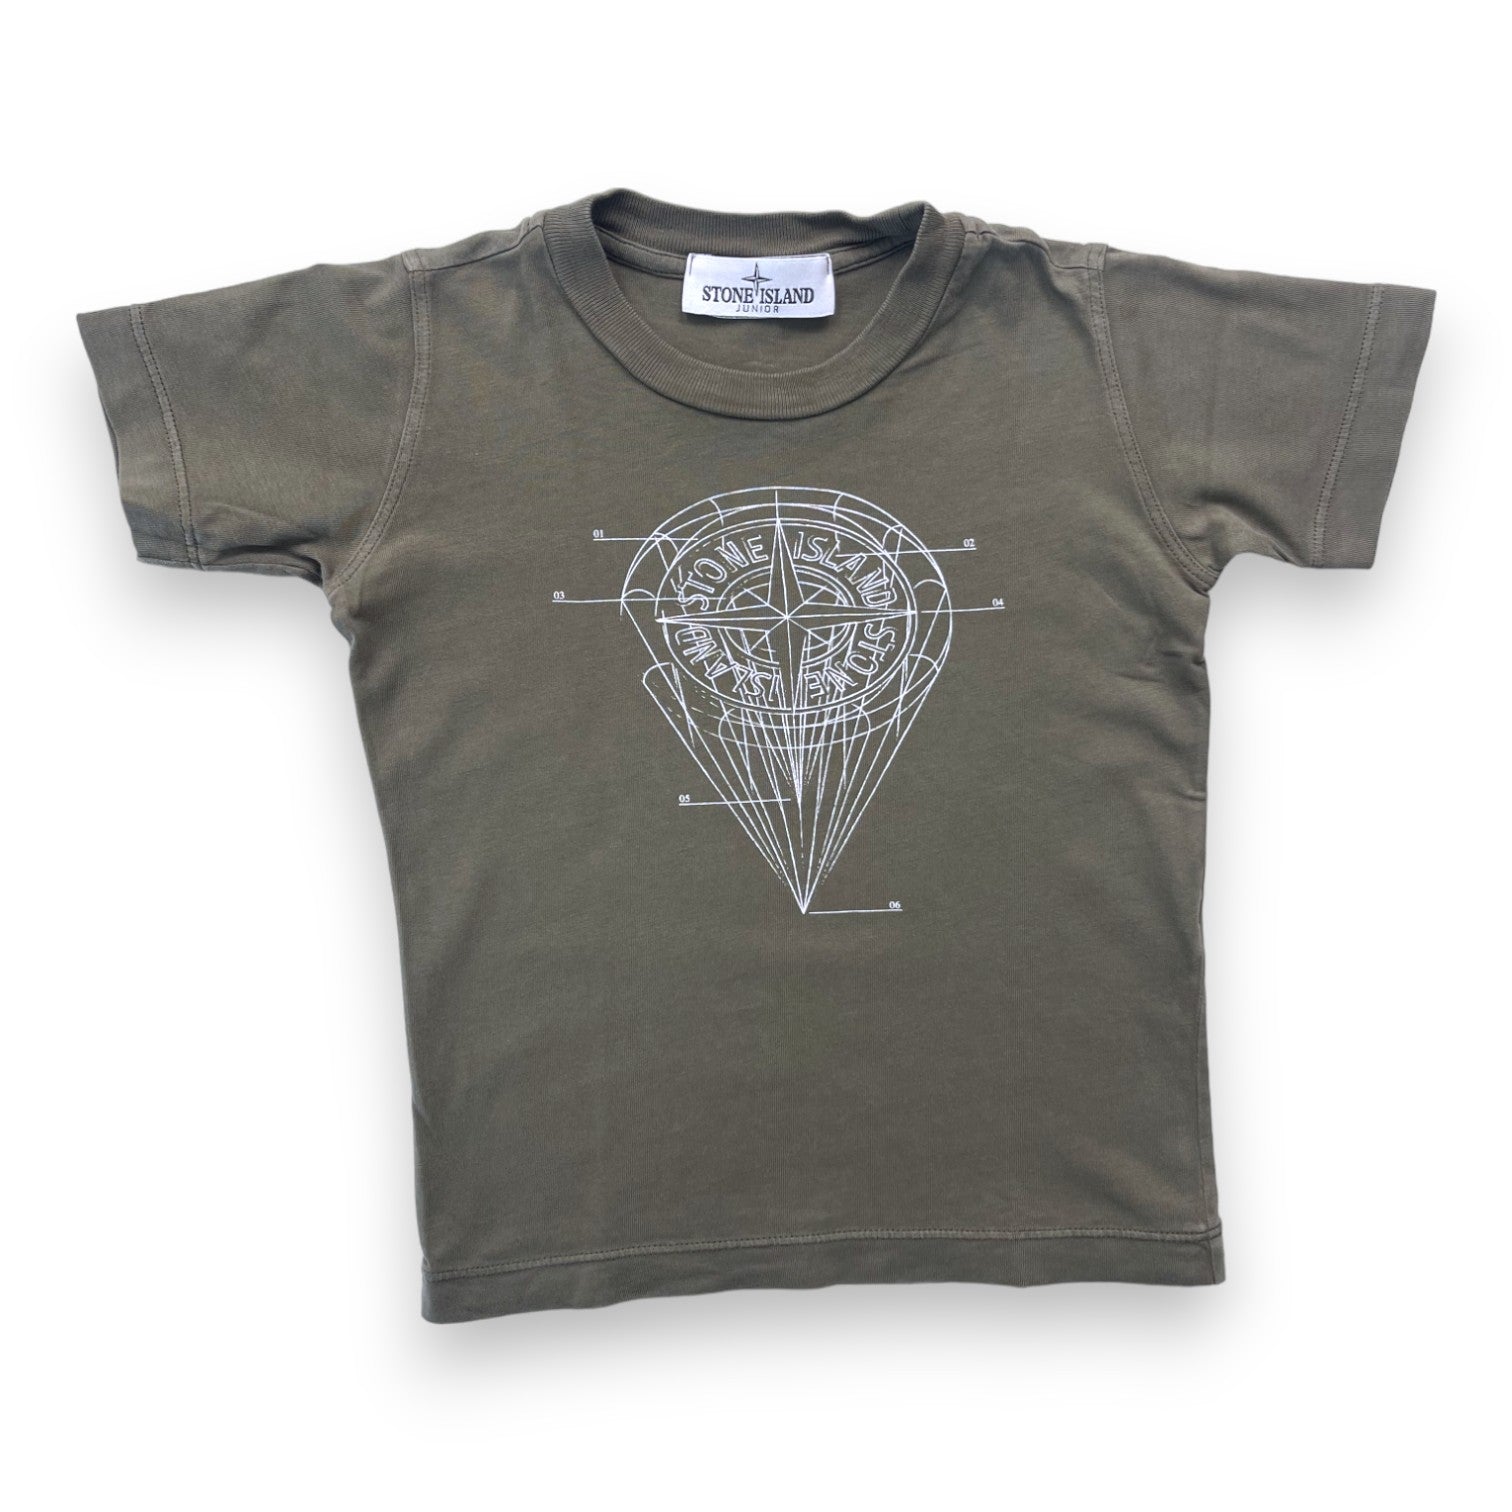 STONE ISLAND - T shirt kaki motif boussole et logo - 2 ans